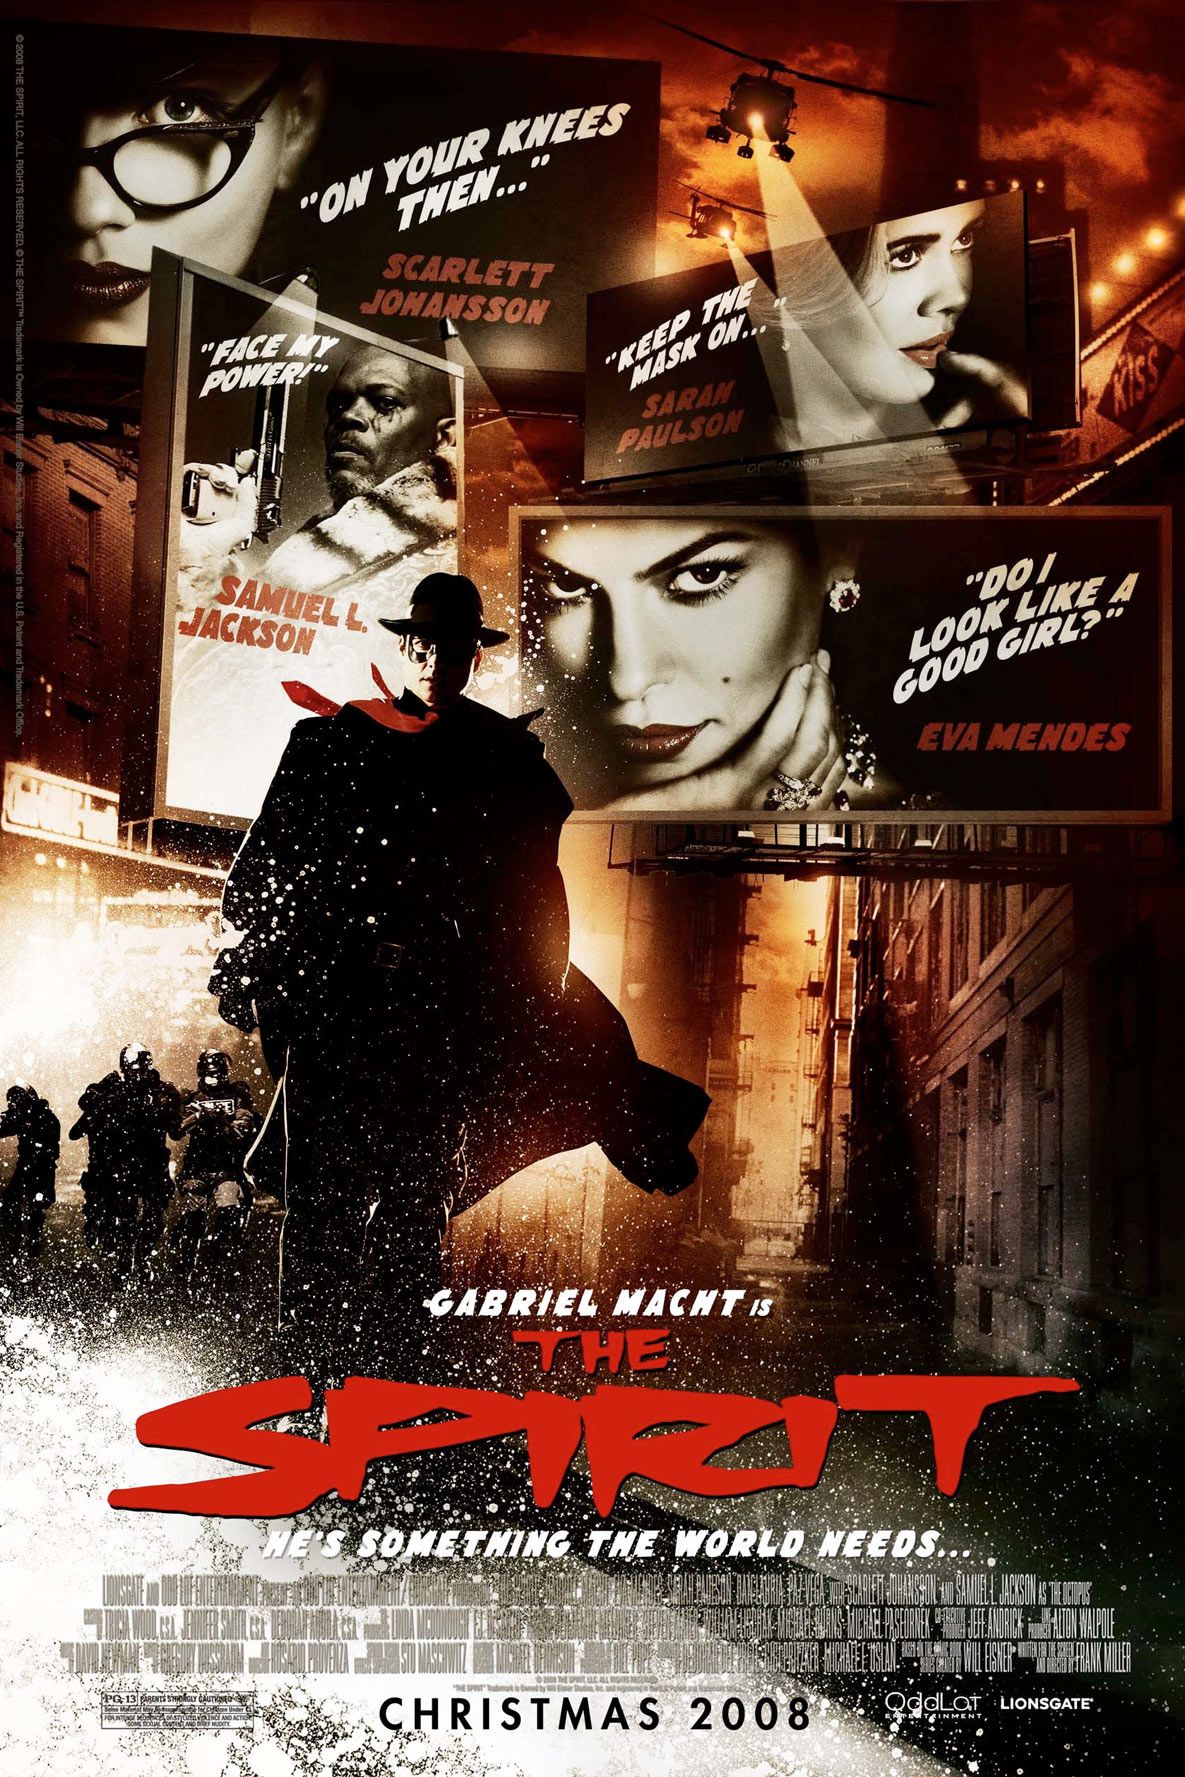 The Spirit Movie Poster